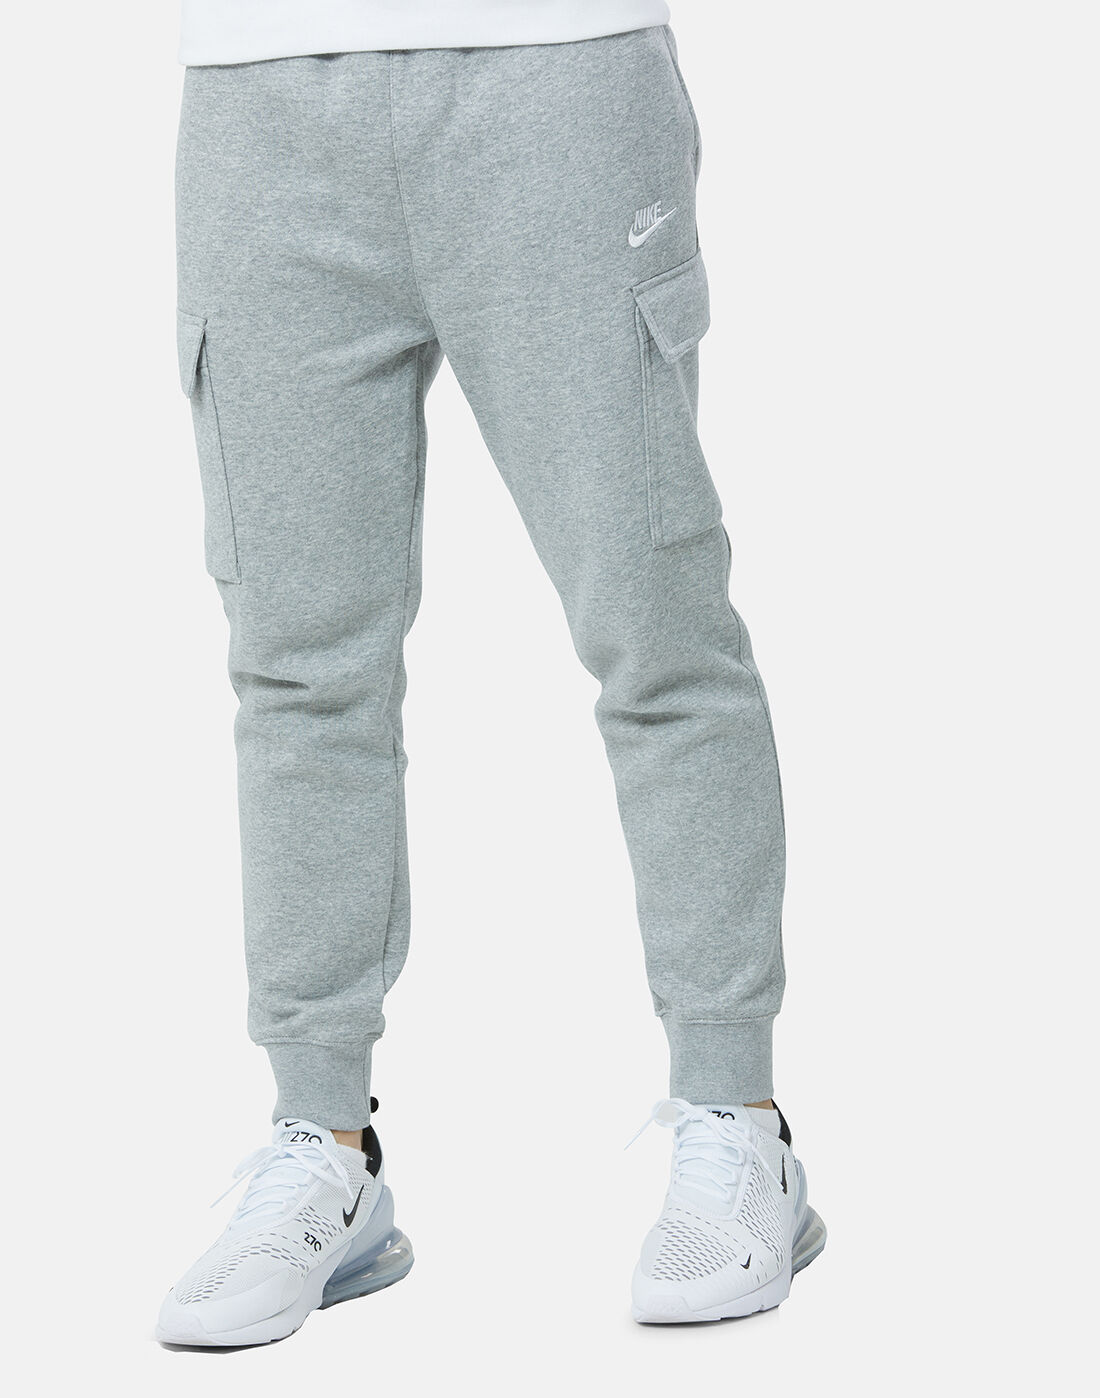 Nike Mens Fleece Cargo Pants - Grey 